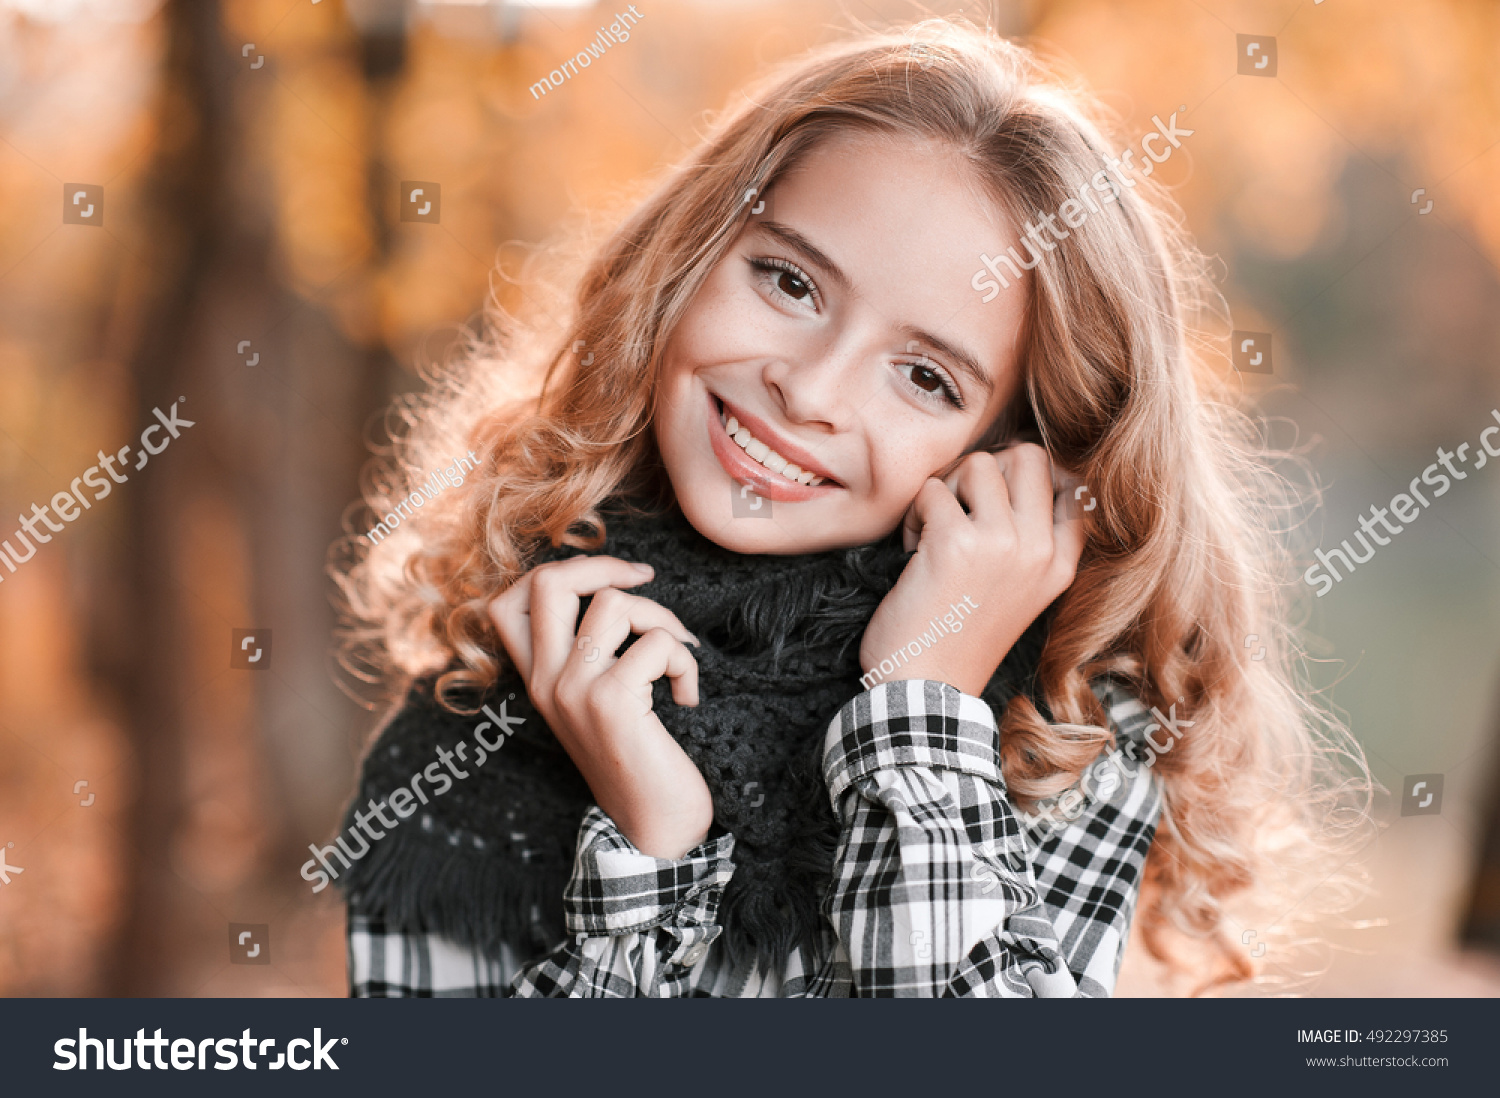 Blonde Teen Girl Smiling